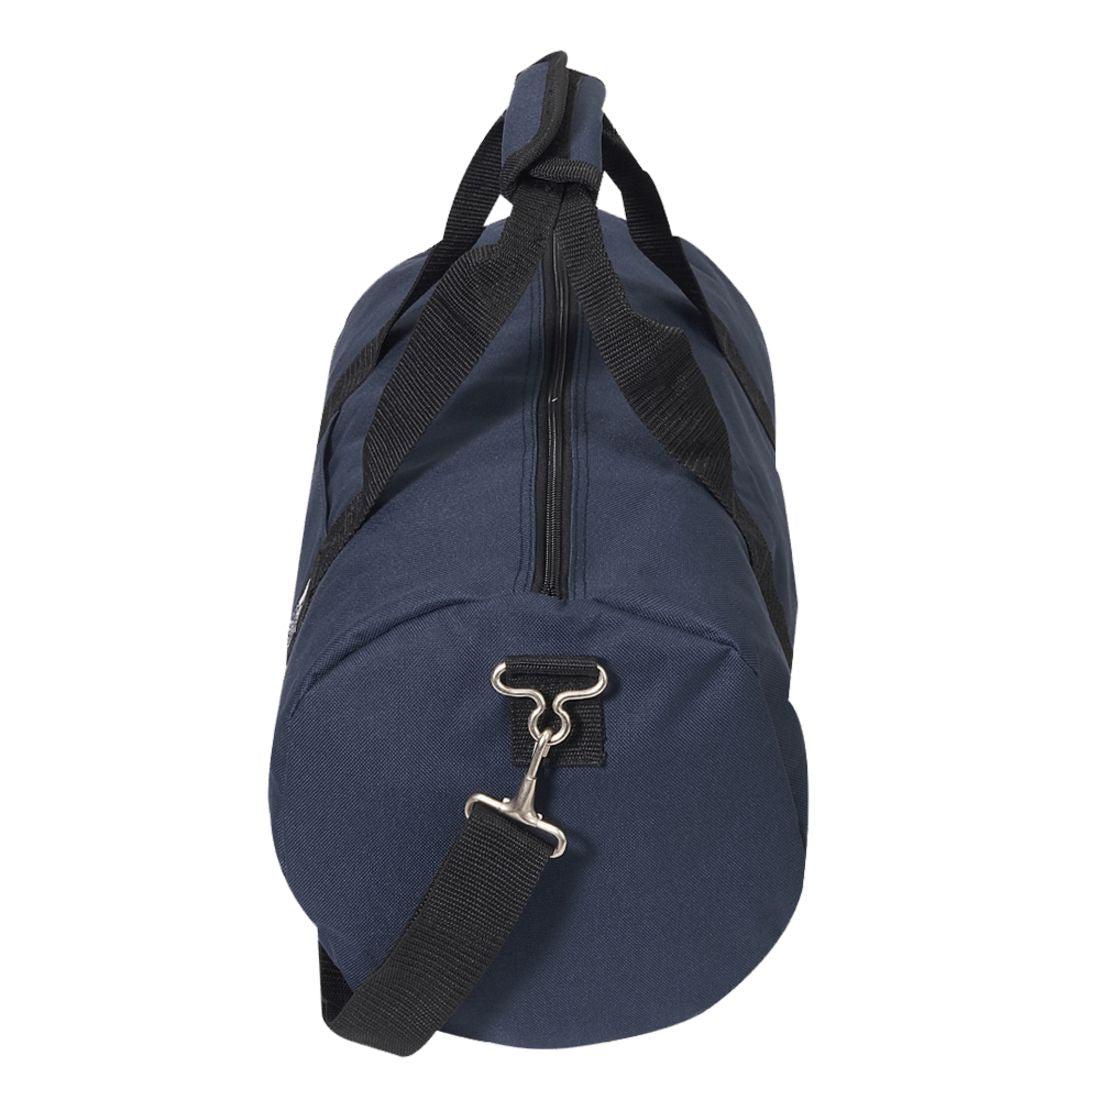 Everest 16-Inch Round Duffel Bag